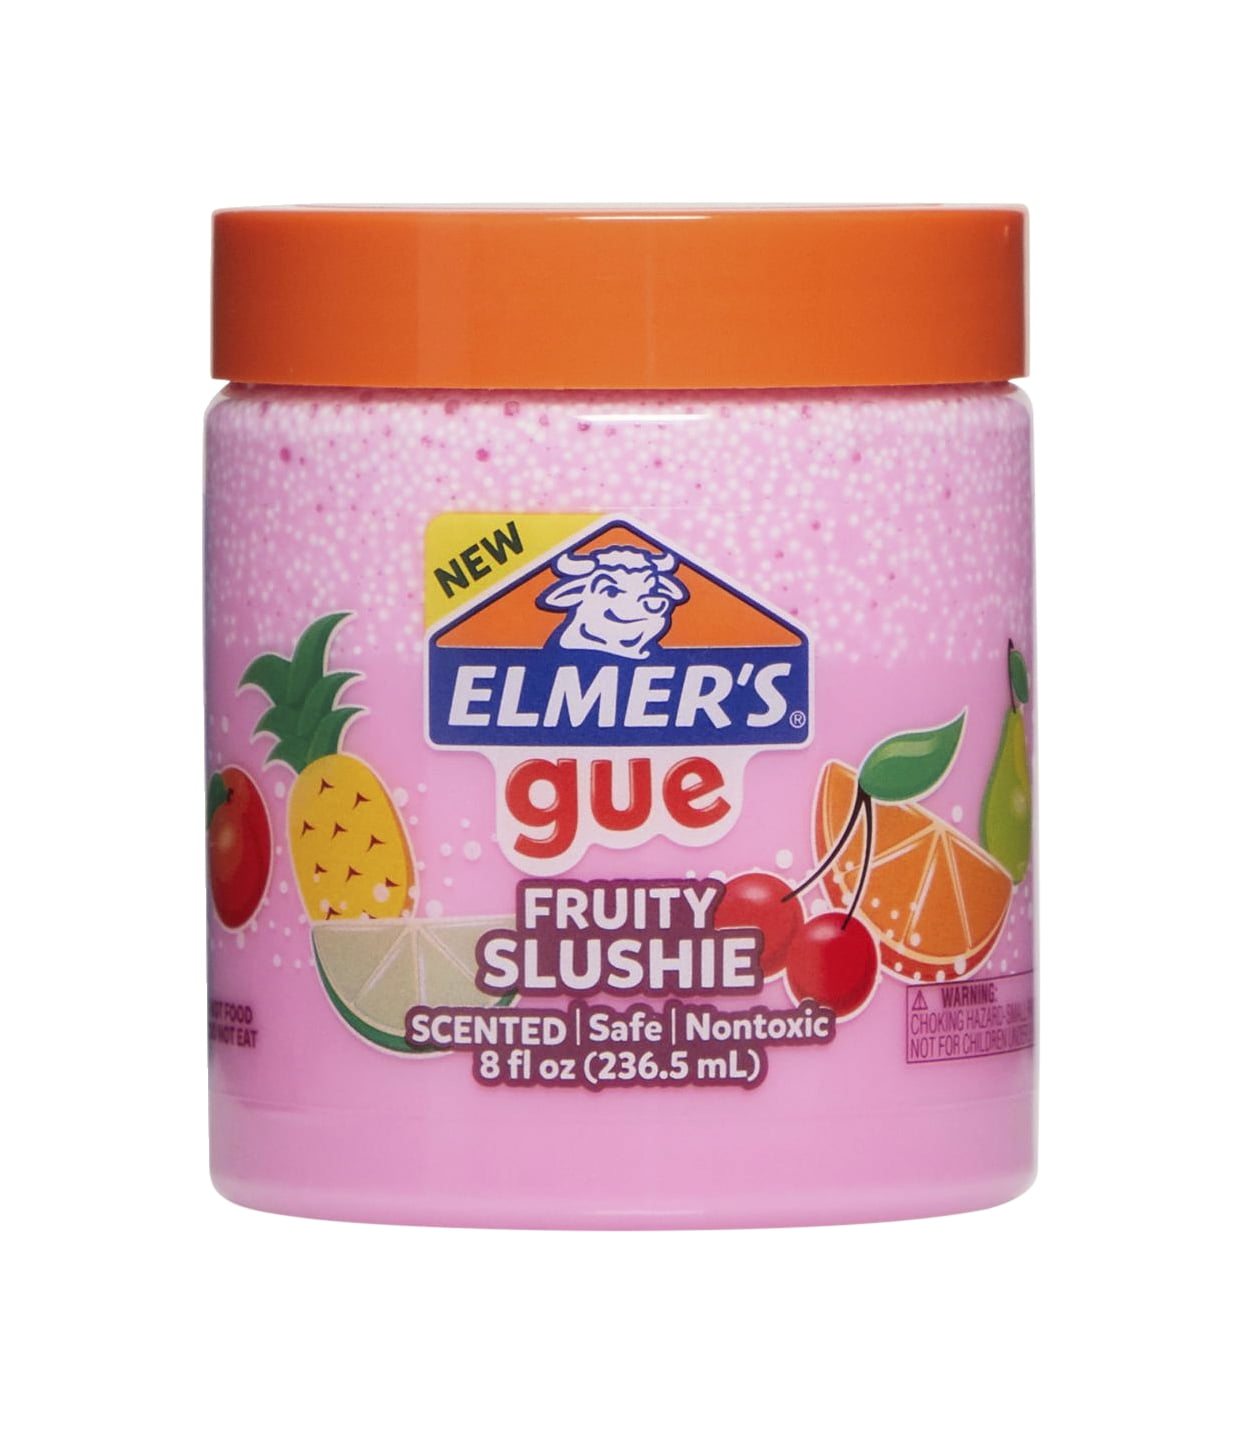 Elmer's Gue Premade Slime, Fruity Slushie Crunchy Slime, Scented, 1 Count